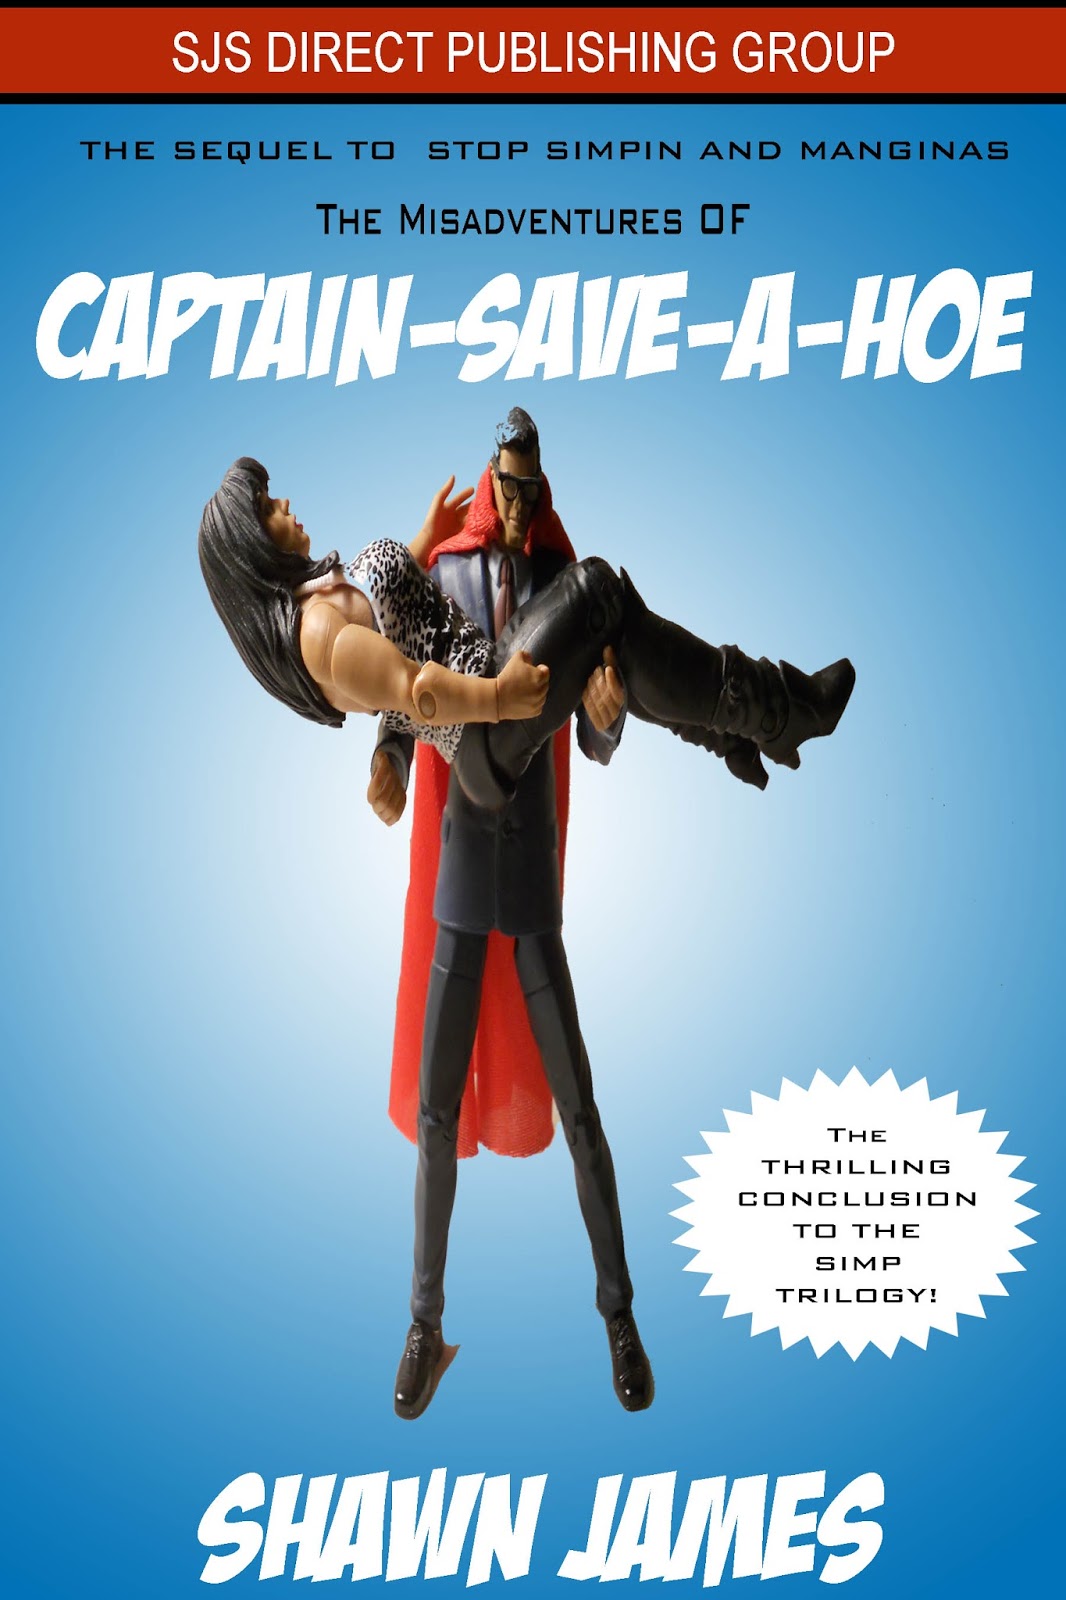 Captain Save A Hoe Quotes. QuotesGram